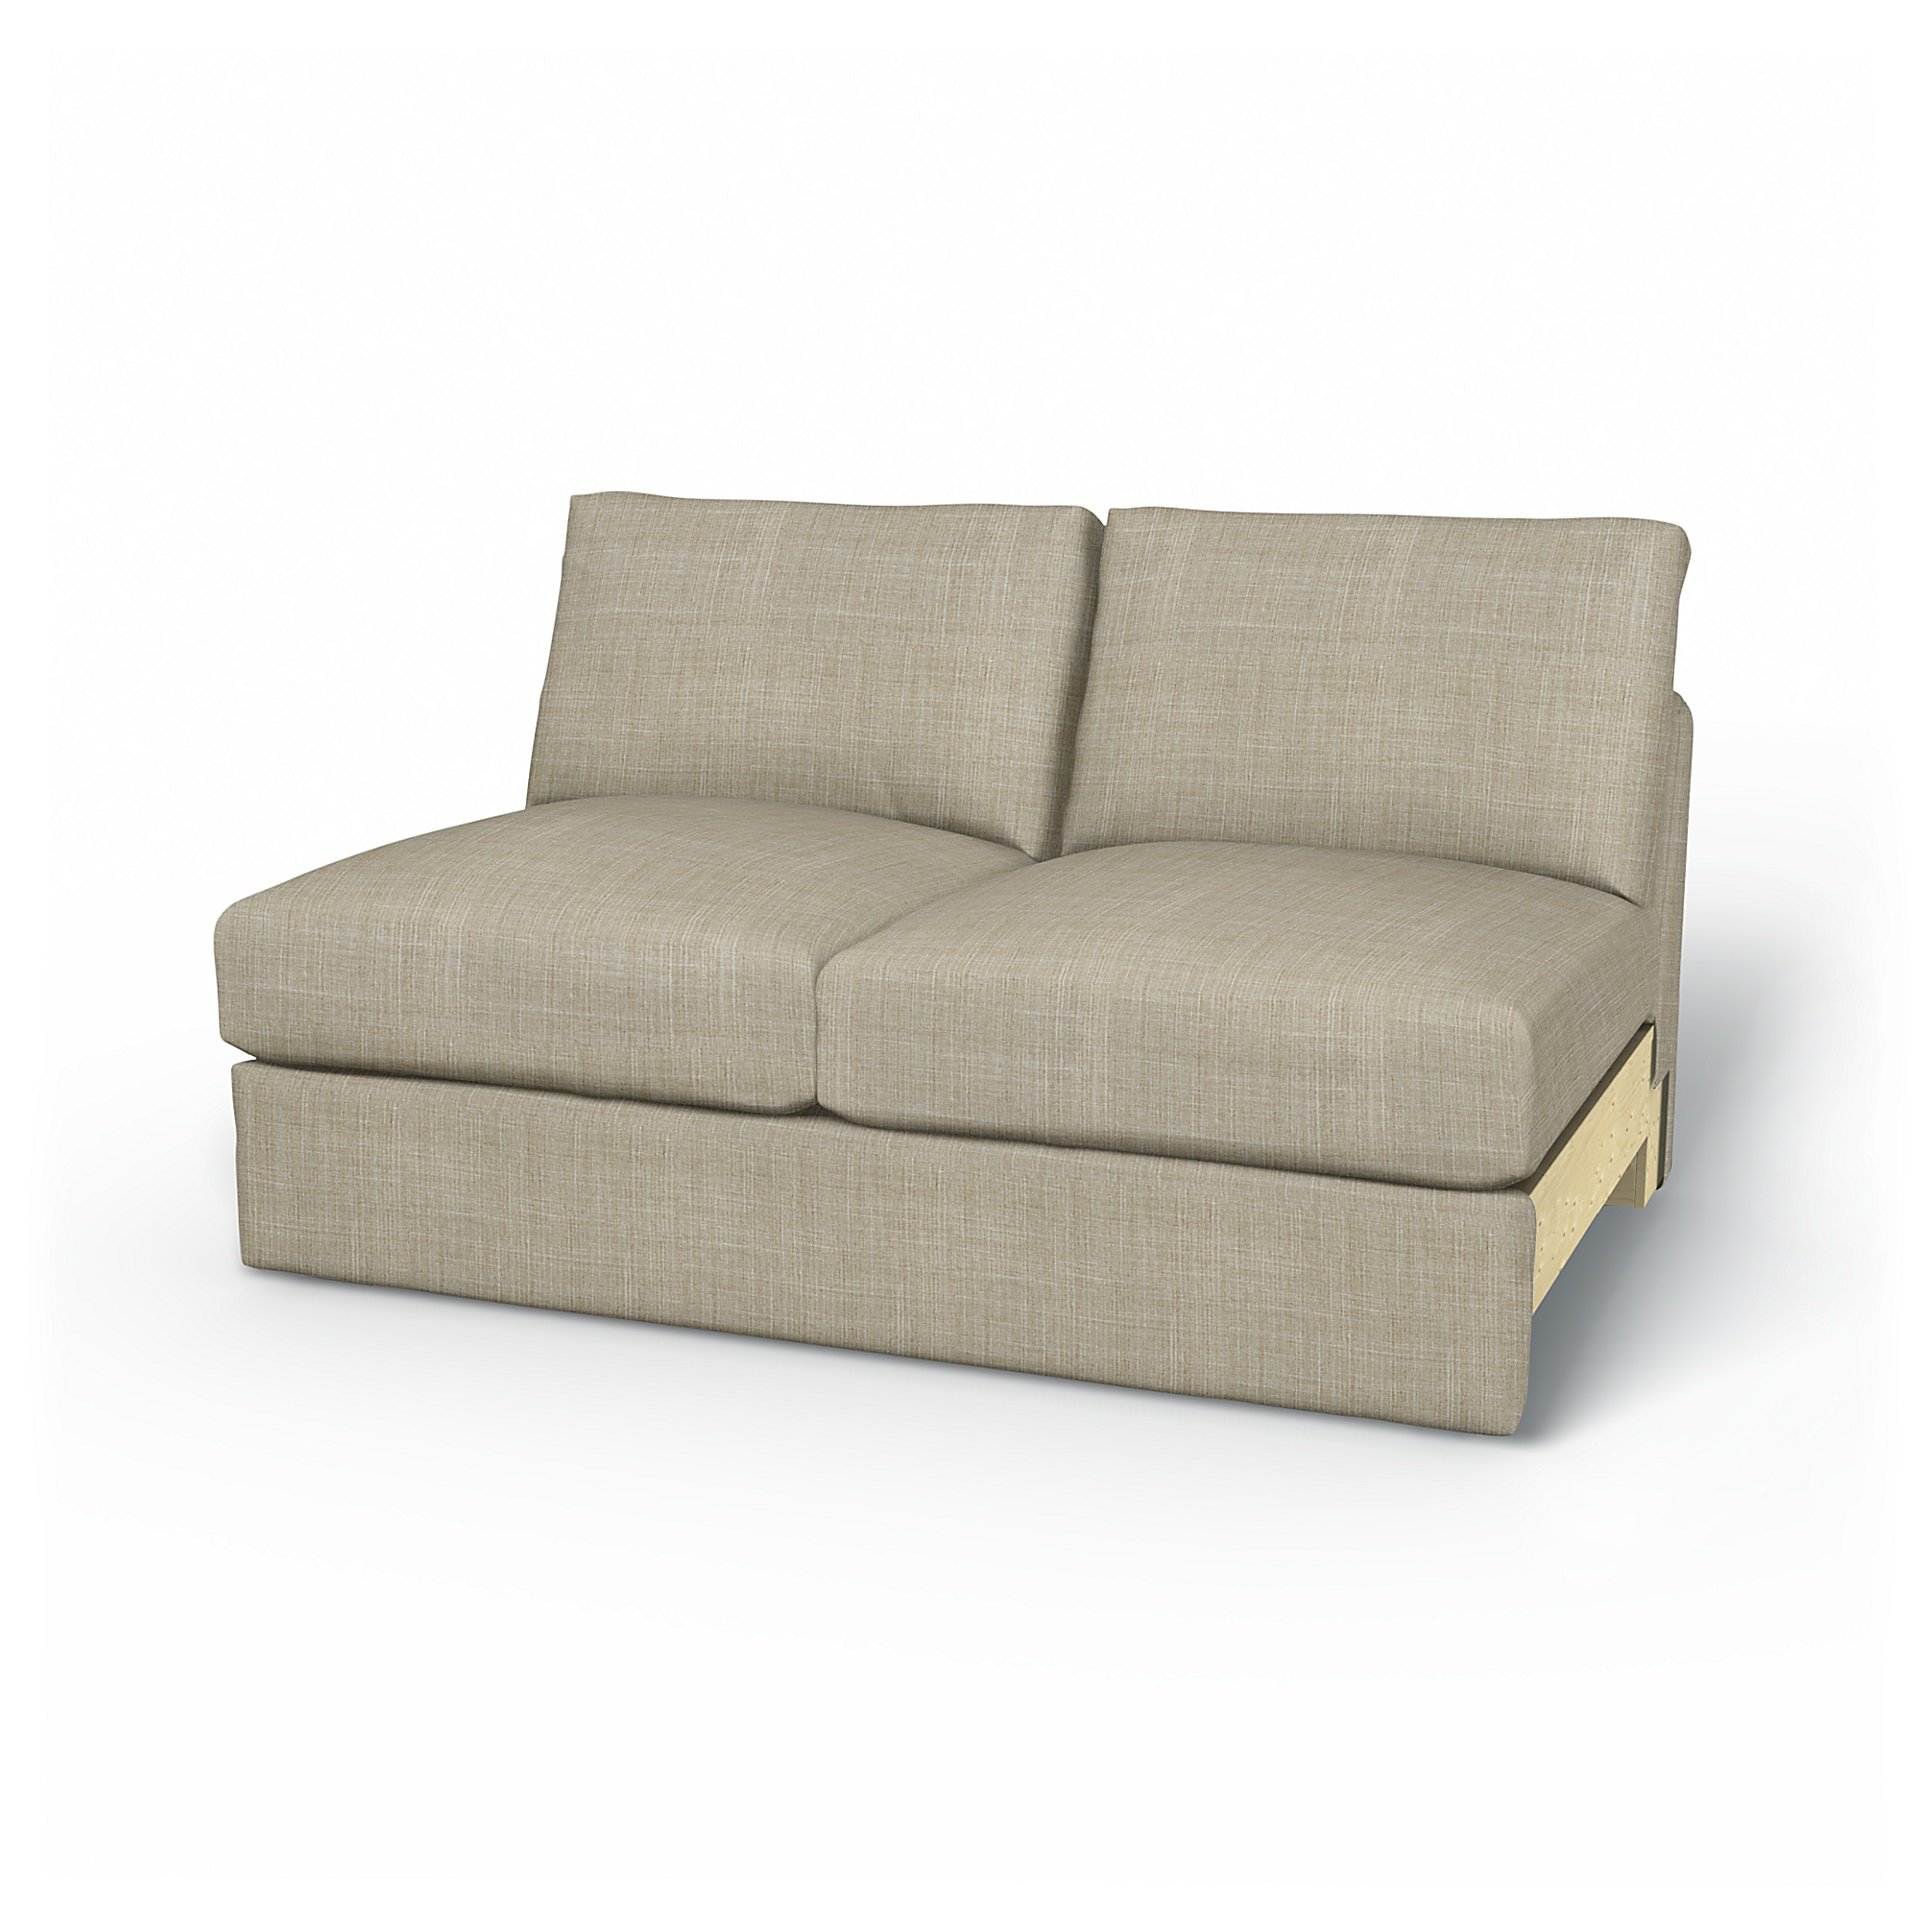 IKEA - Vimle 2 seater bed sofa without armrests, Sand Beige, Boucle & Texture - Bemz